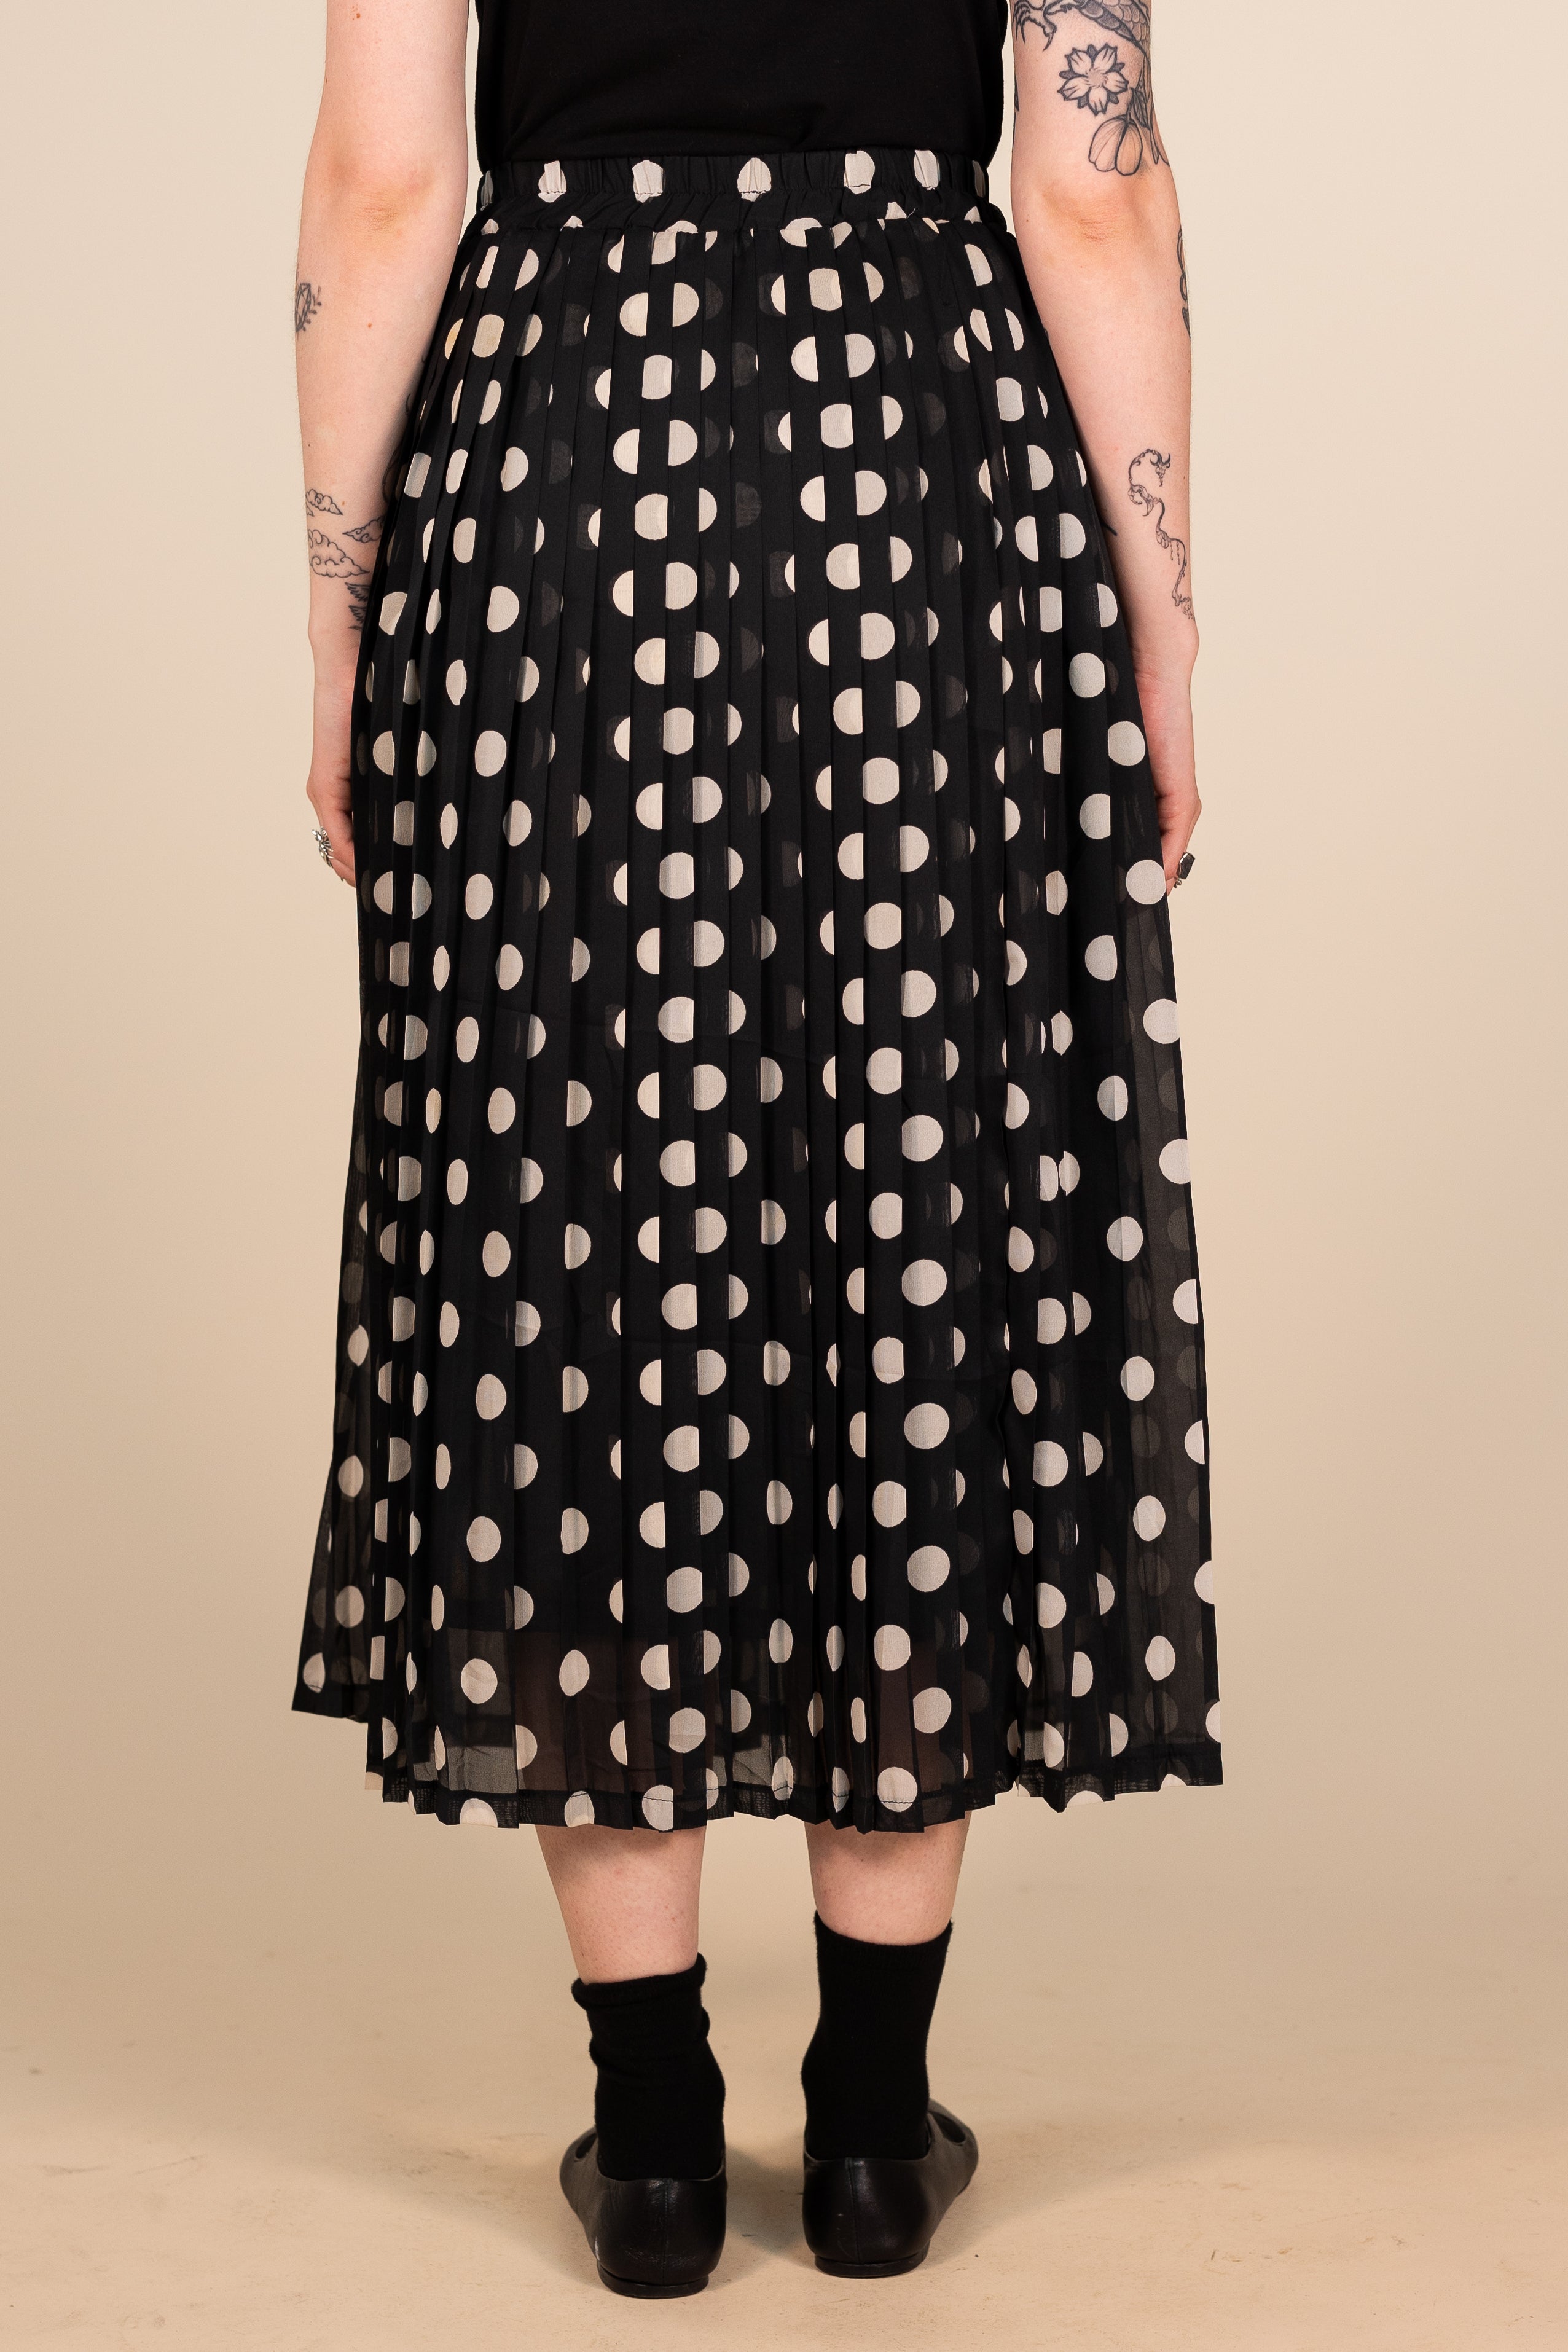 Chiffon Skirt with Polkadot Print